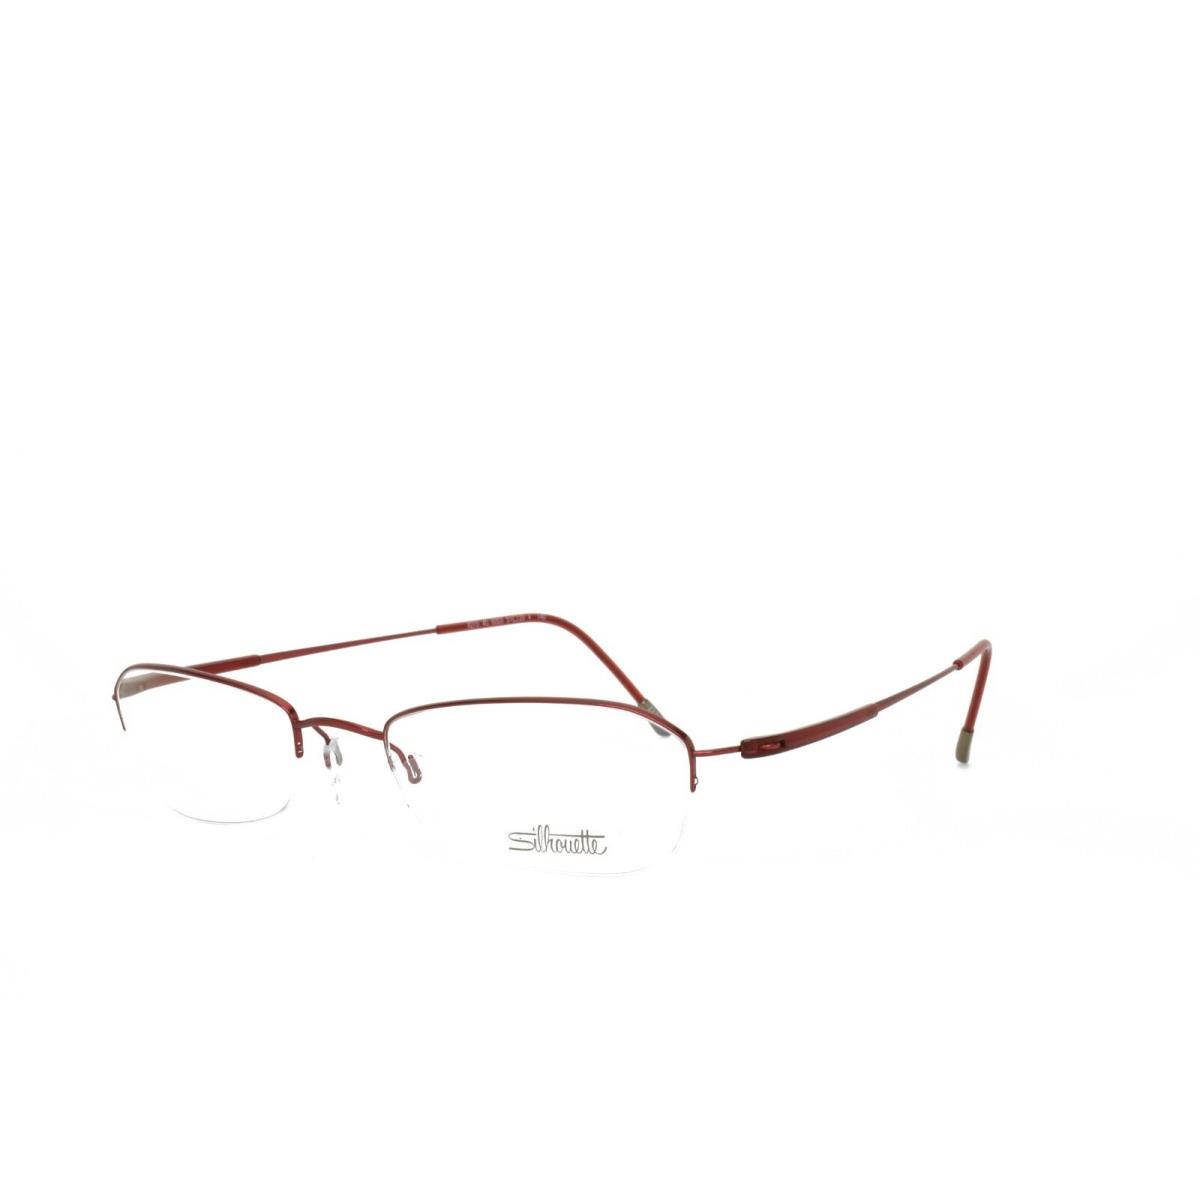 Silhouette 4270 40 6053 51-20-140 Red Eyeglasses